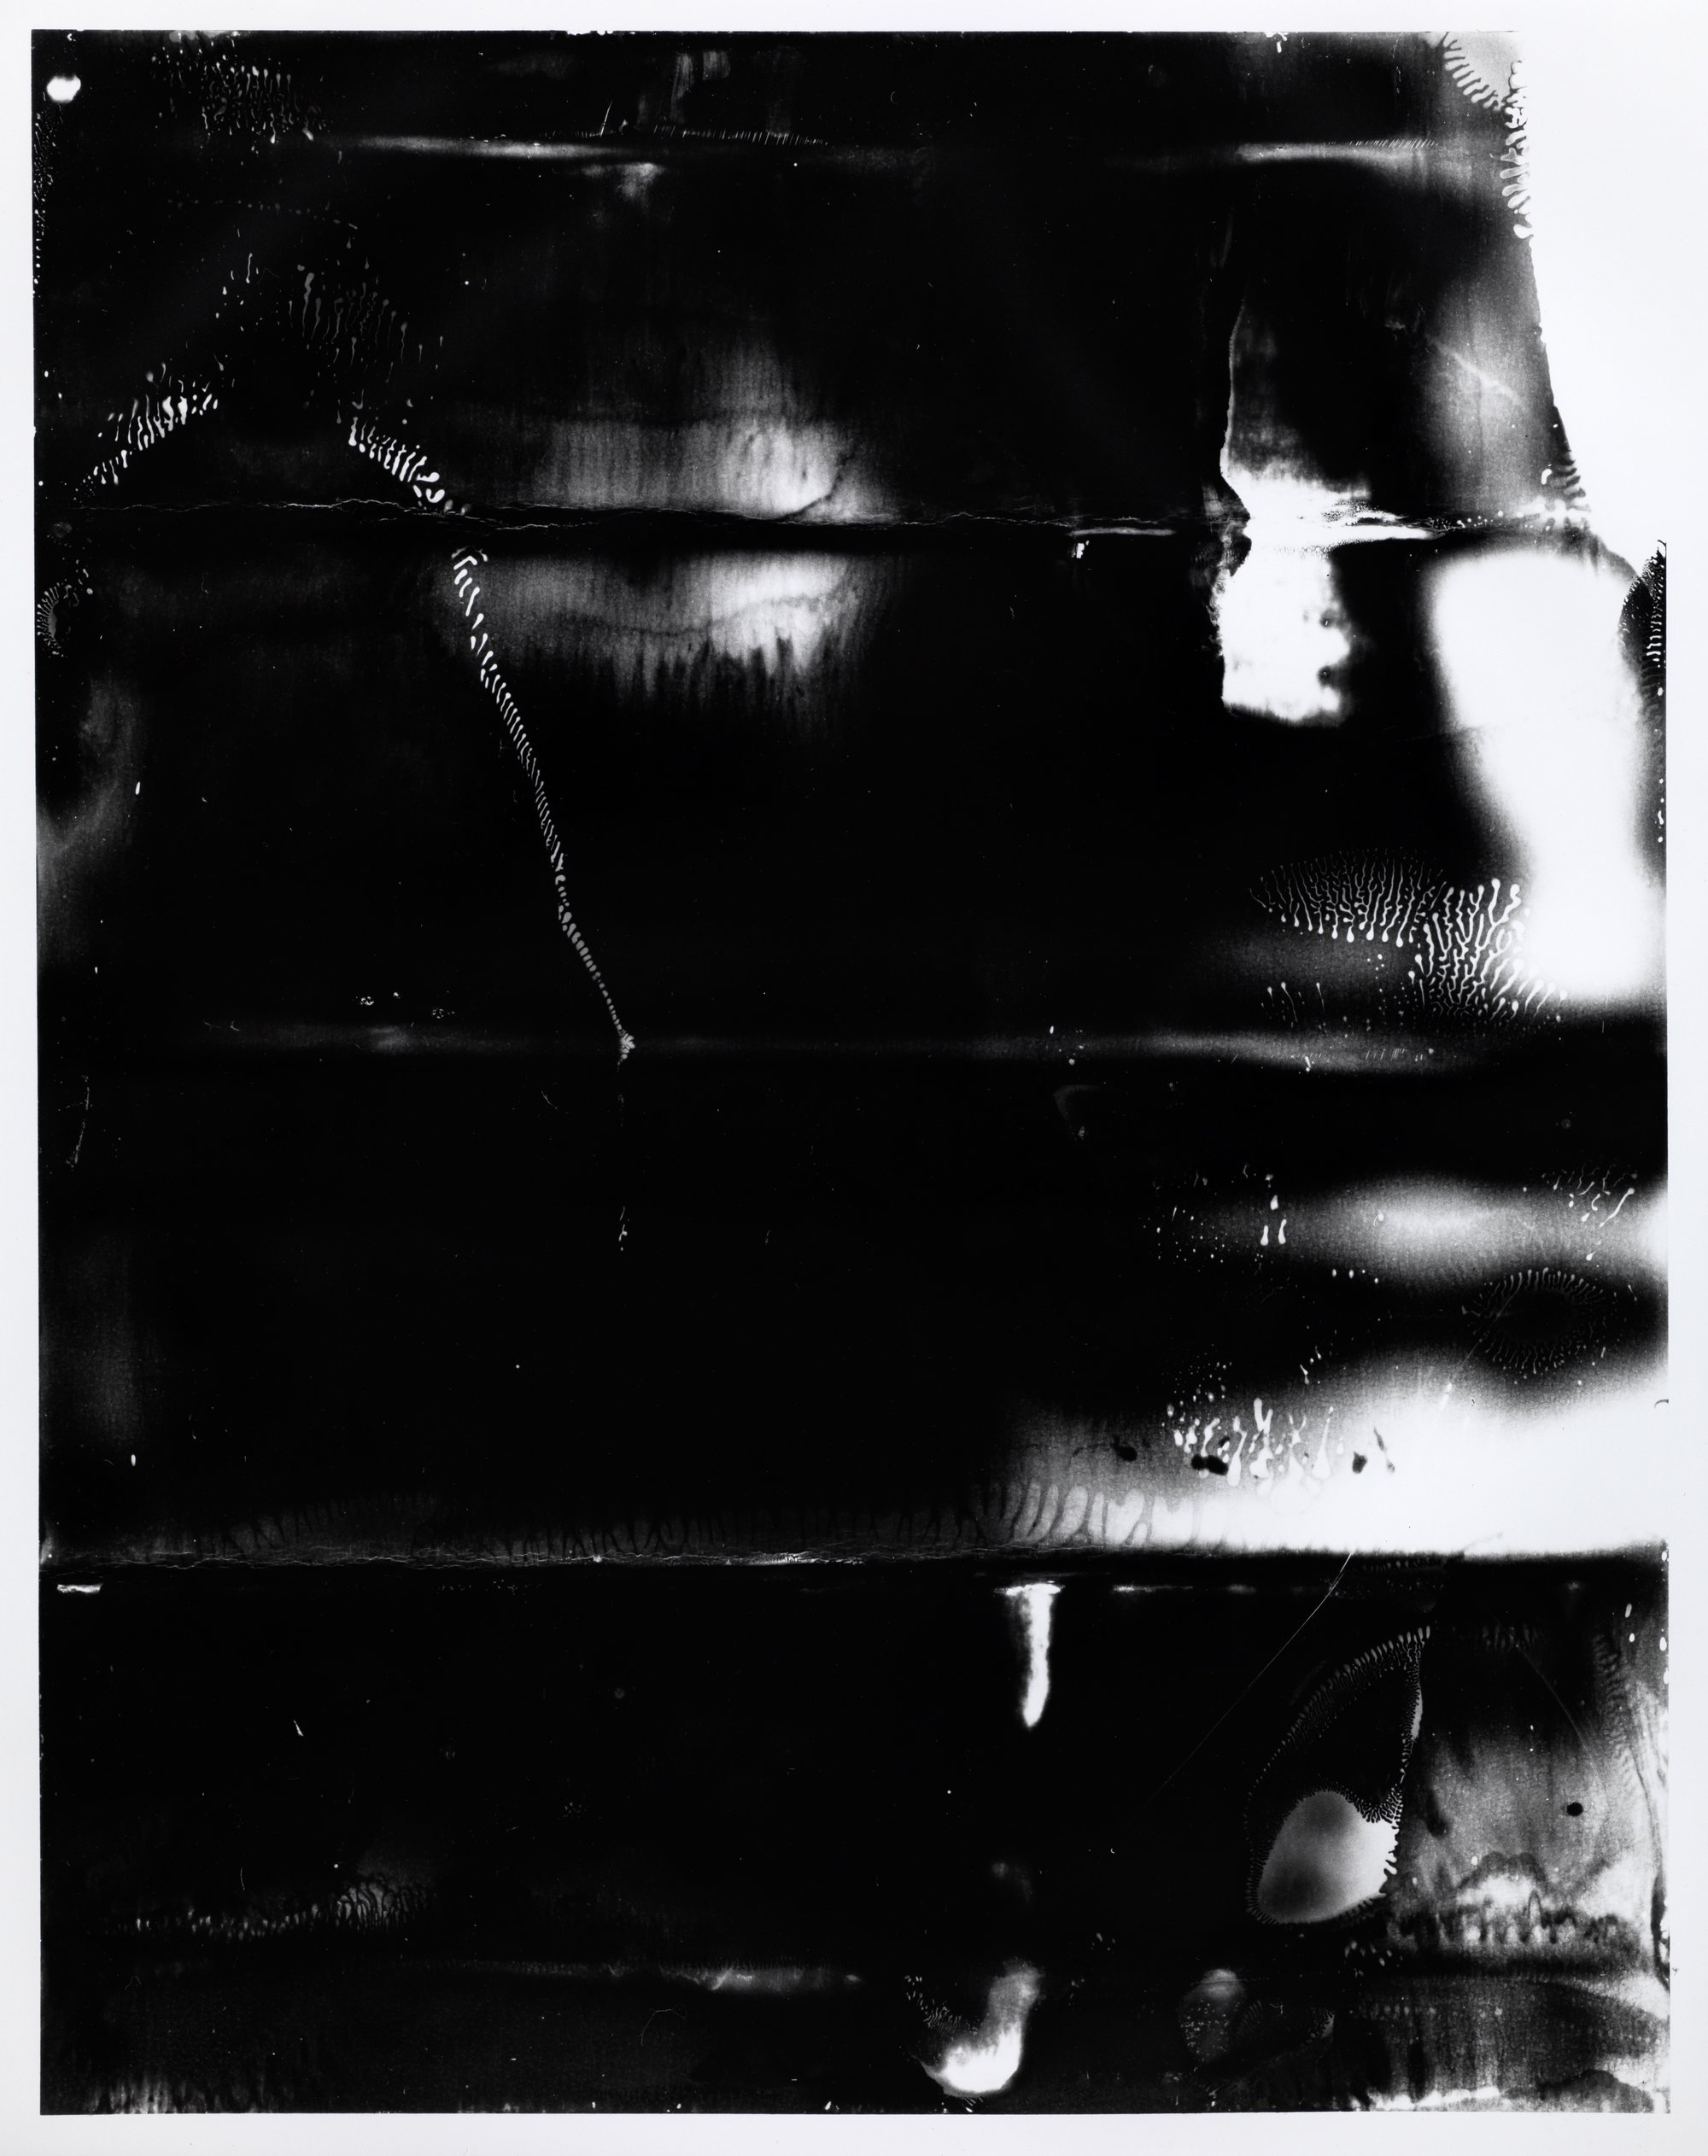 Shinro Ohtake, Retina/Dark Fever 20, gelatine silver print, 55.7 x 45.5 cm (21 7/8 x 17 7/8 in), 1990